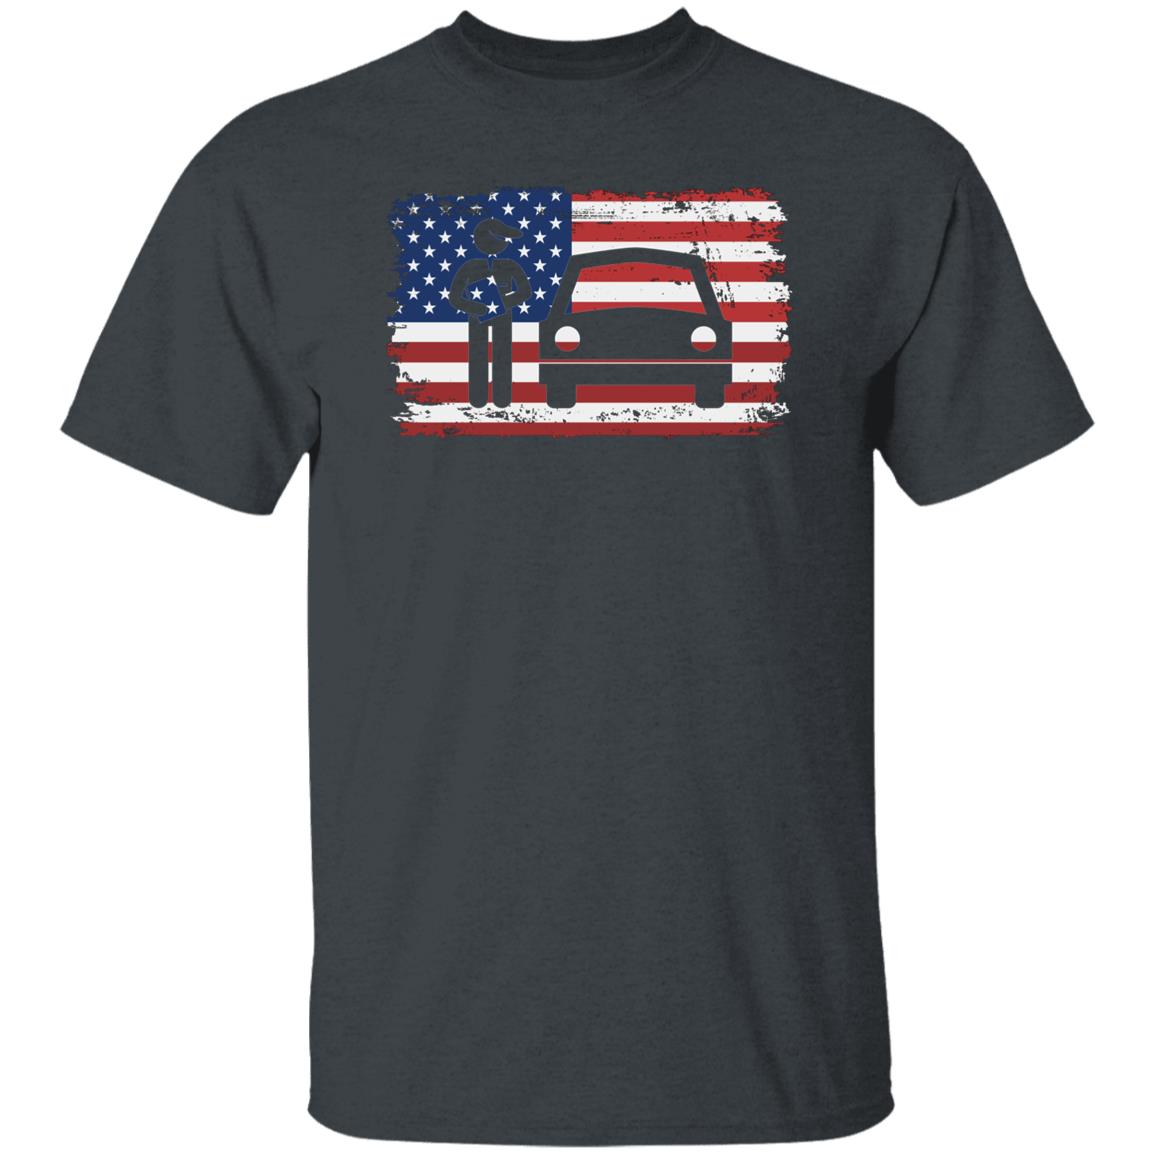 Vehicle mechanic - technician US flag Unisex T-shirt black dark heather-Dark Heather-Family-Gift-Planet